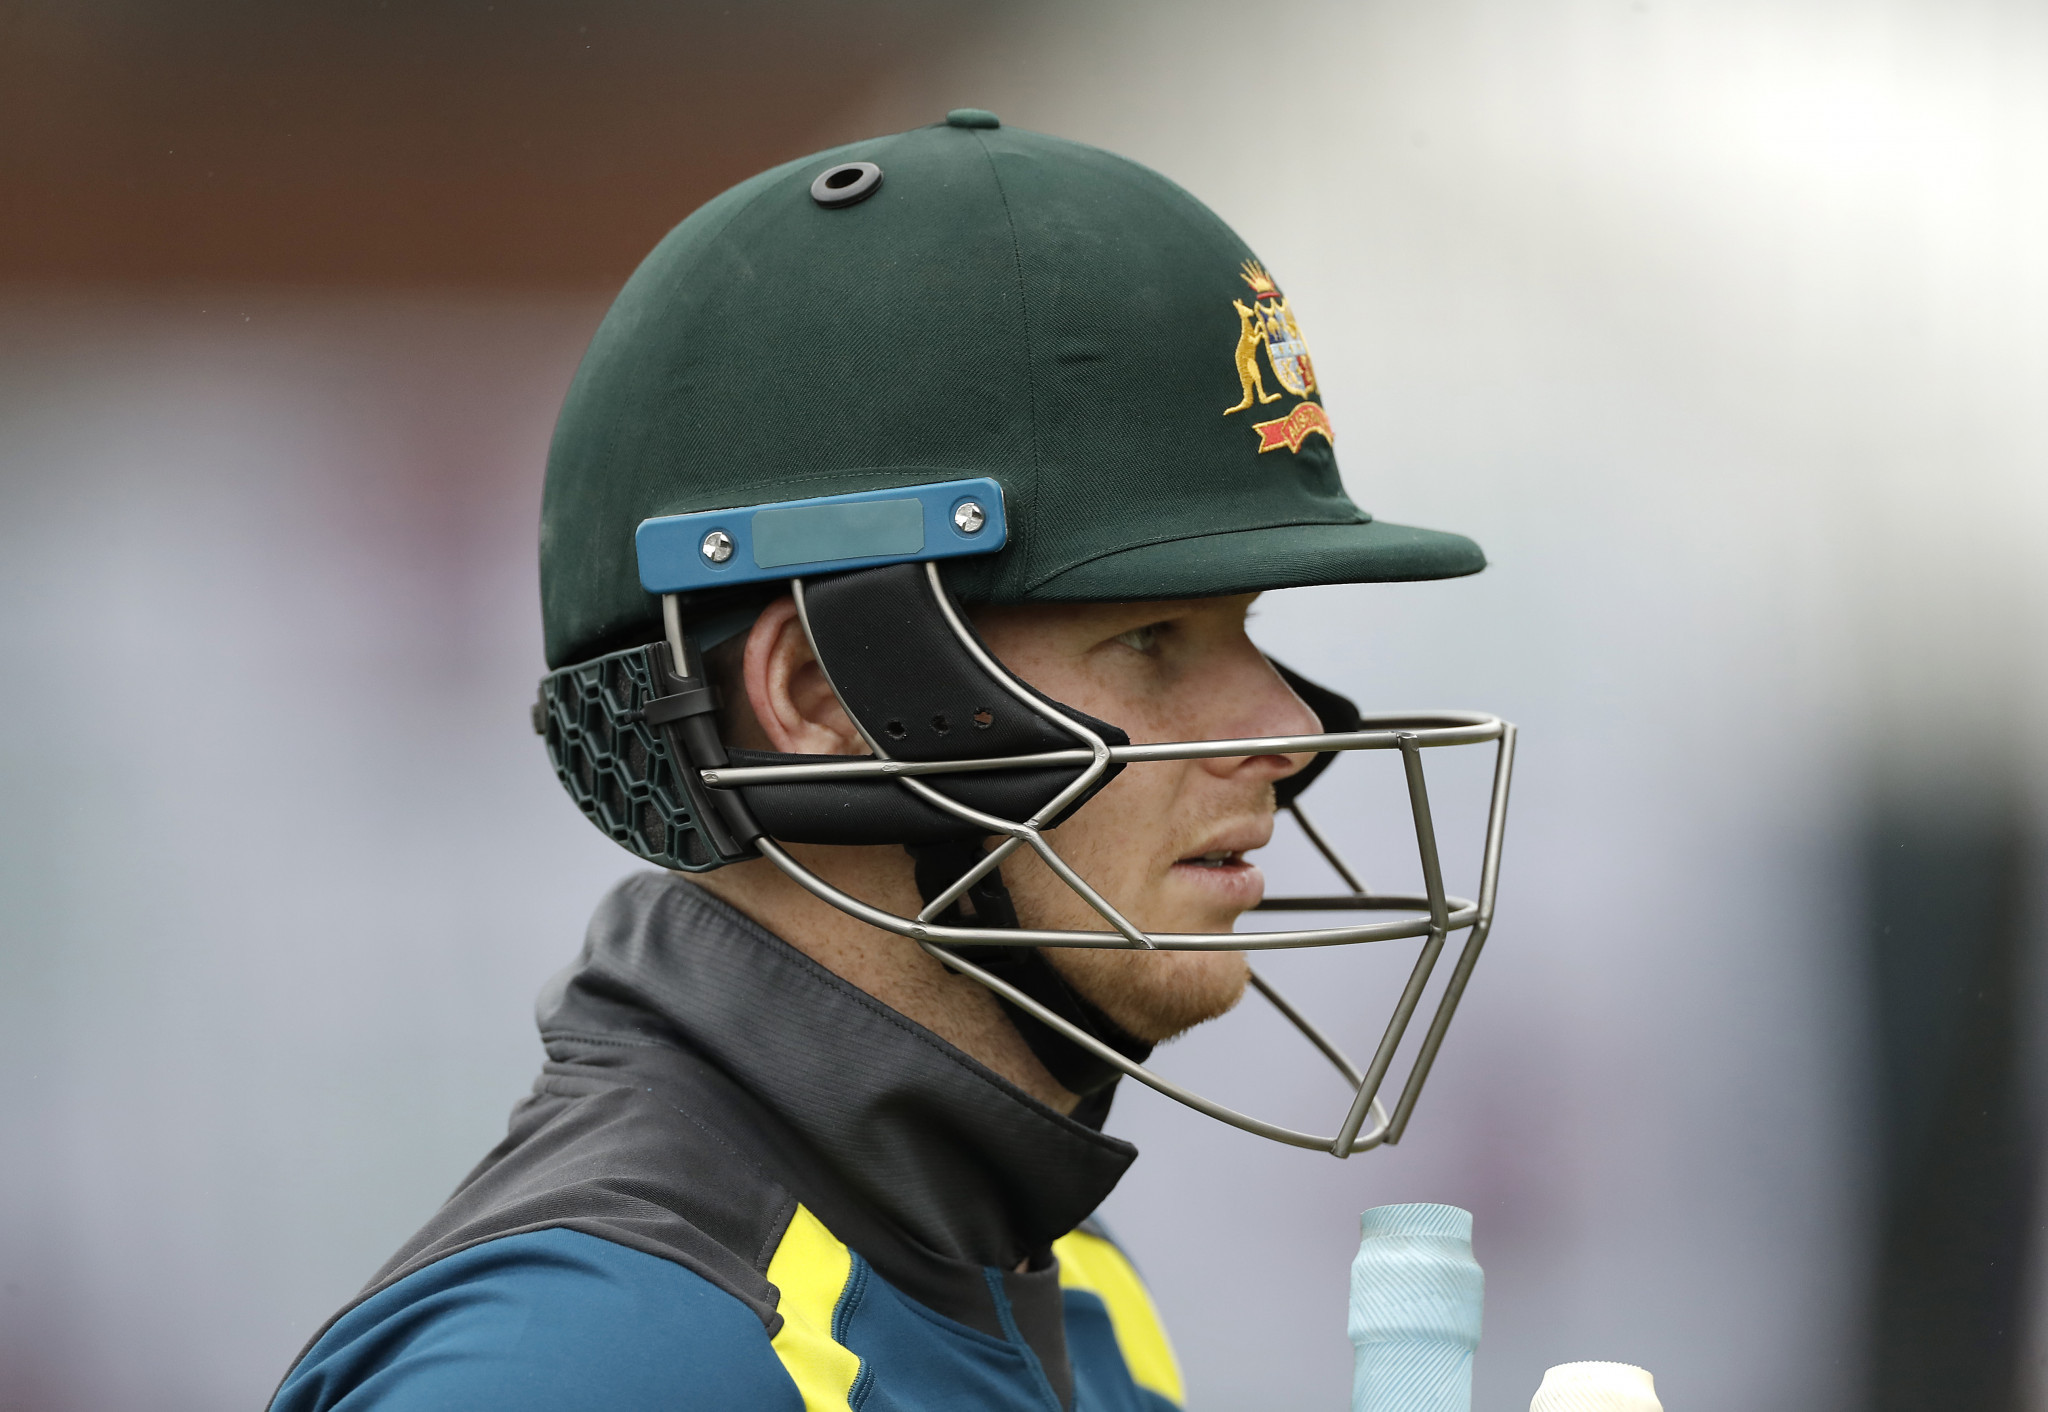 Loughborough University highlight work to boost cricket helmet safety